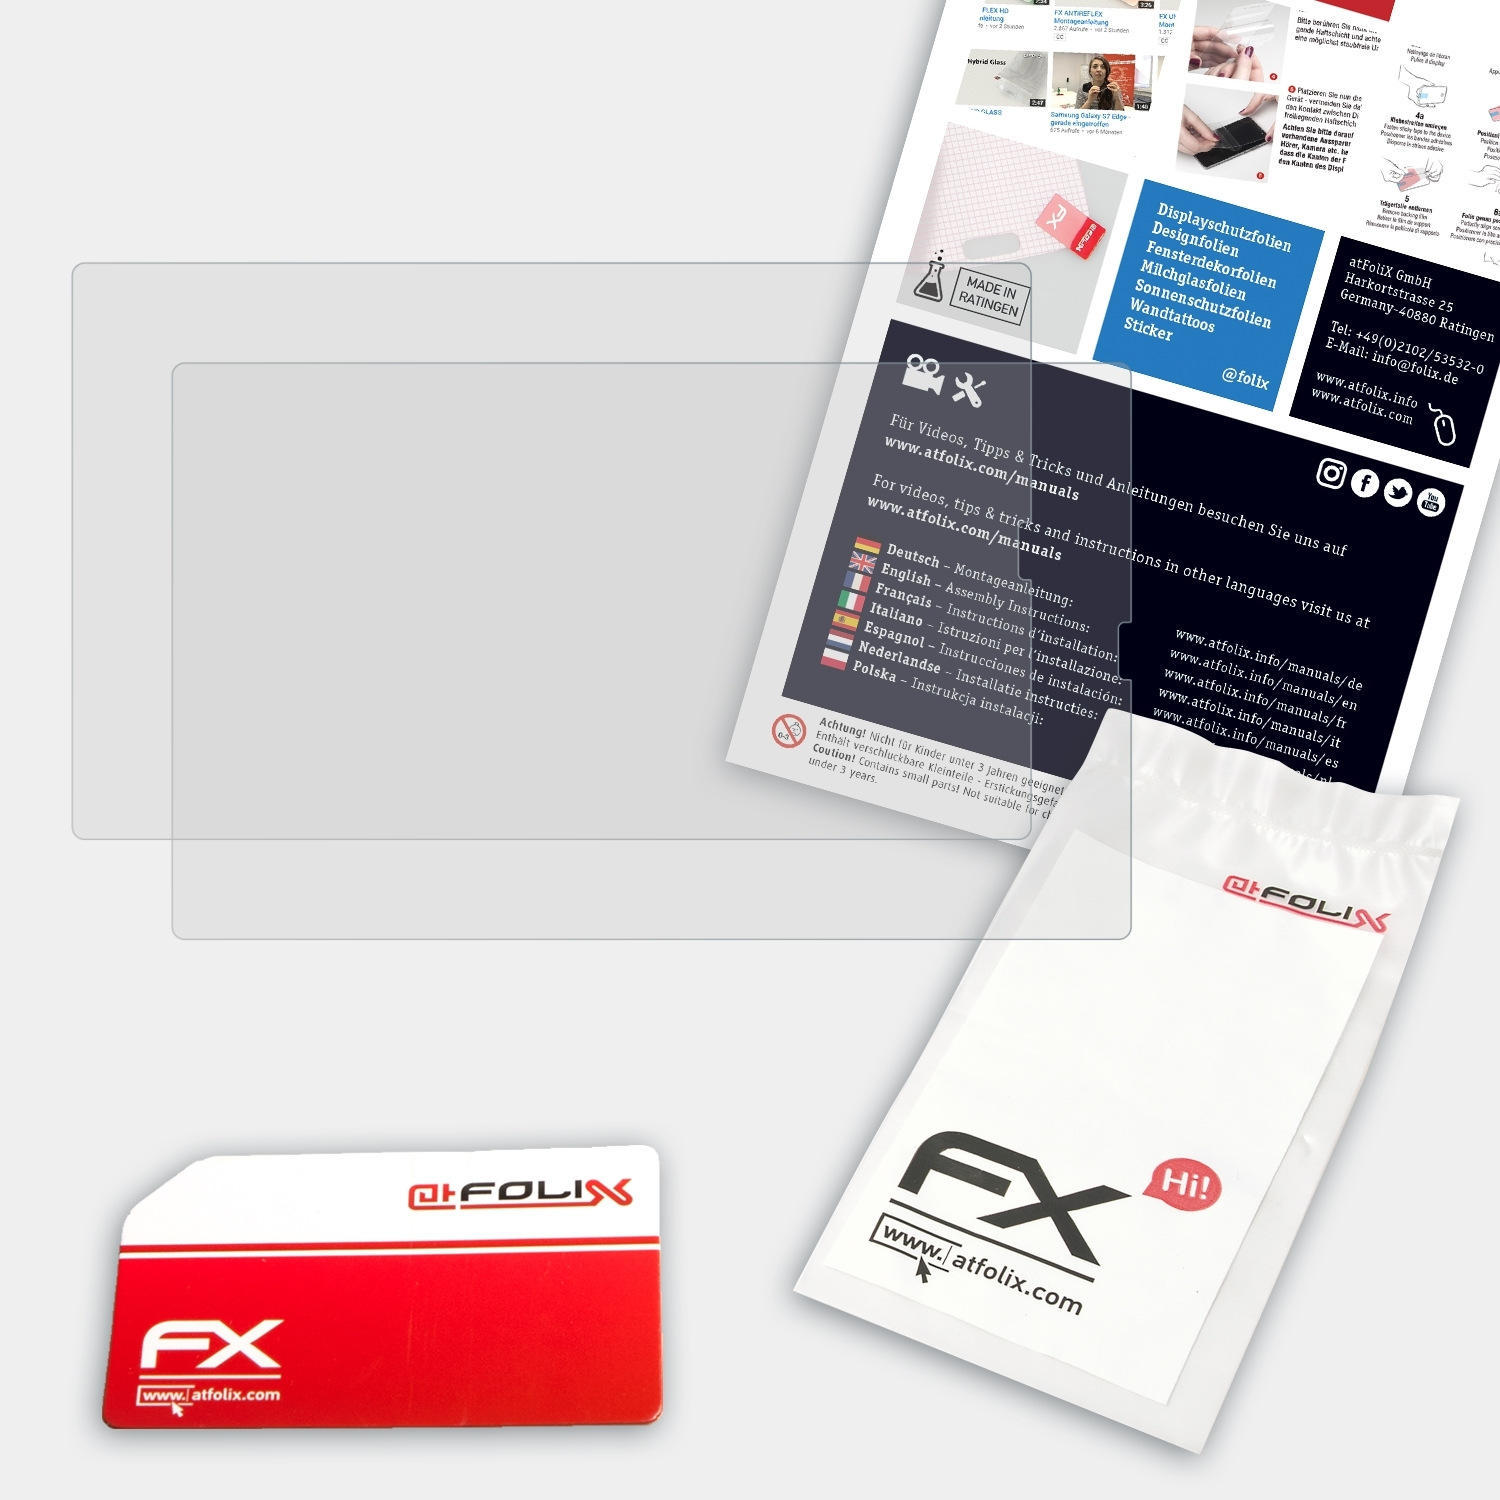 Wacom Pro Displayschutz(für 16) FX-Antireflex ATFOLIX MobileStudio 2x